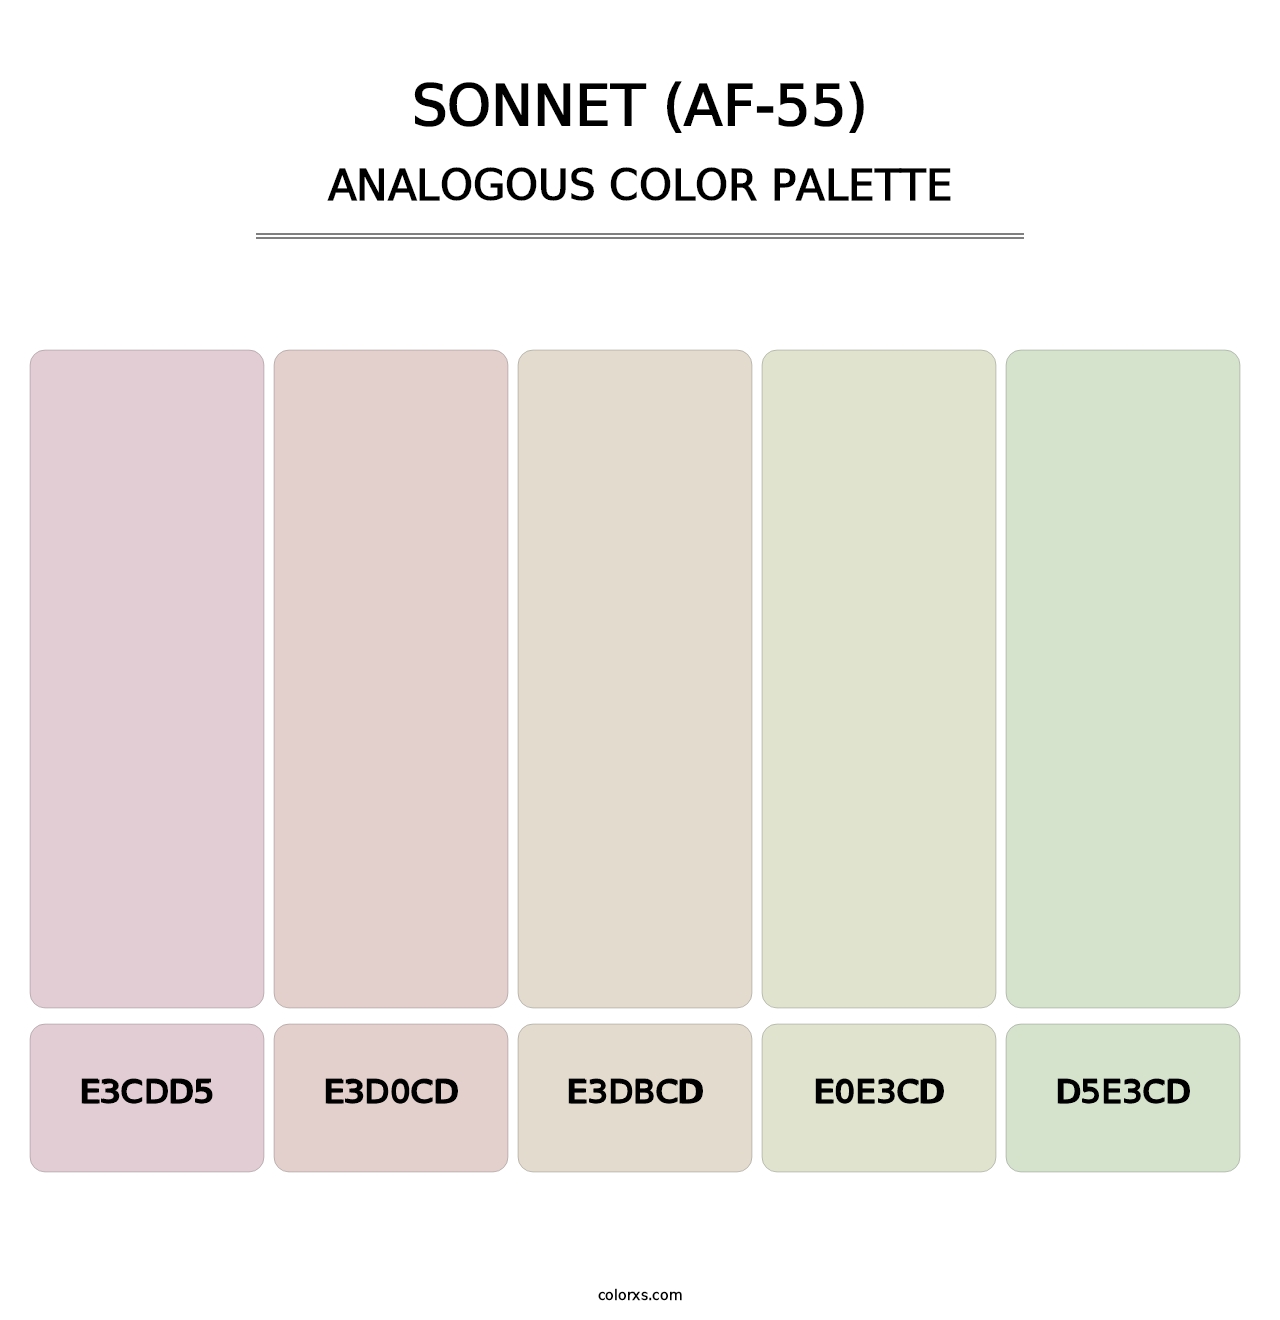 Sonnet (AF-55) - Analogous Color Palette